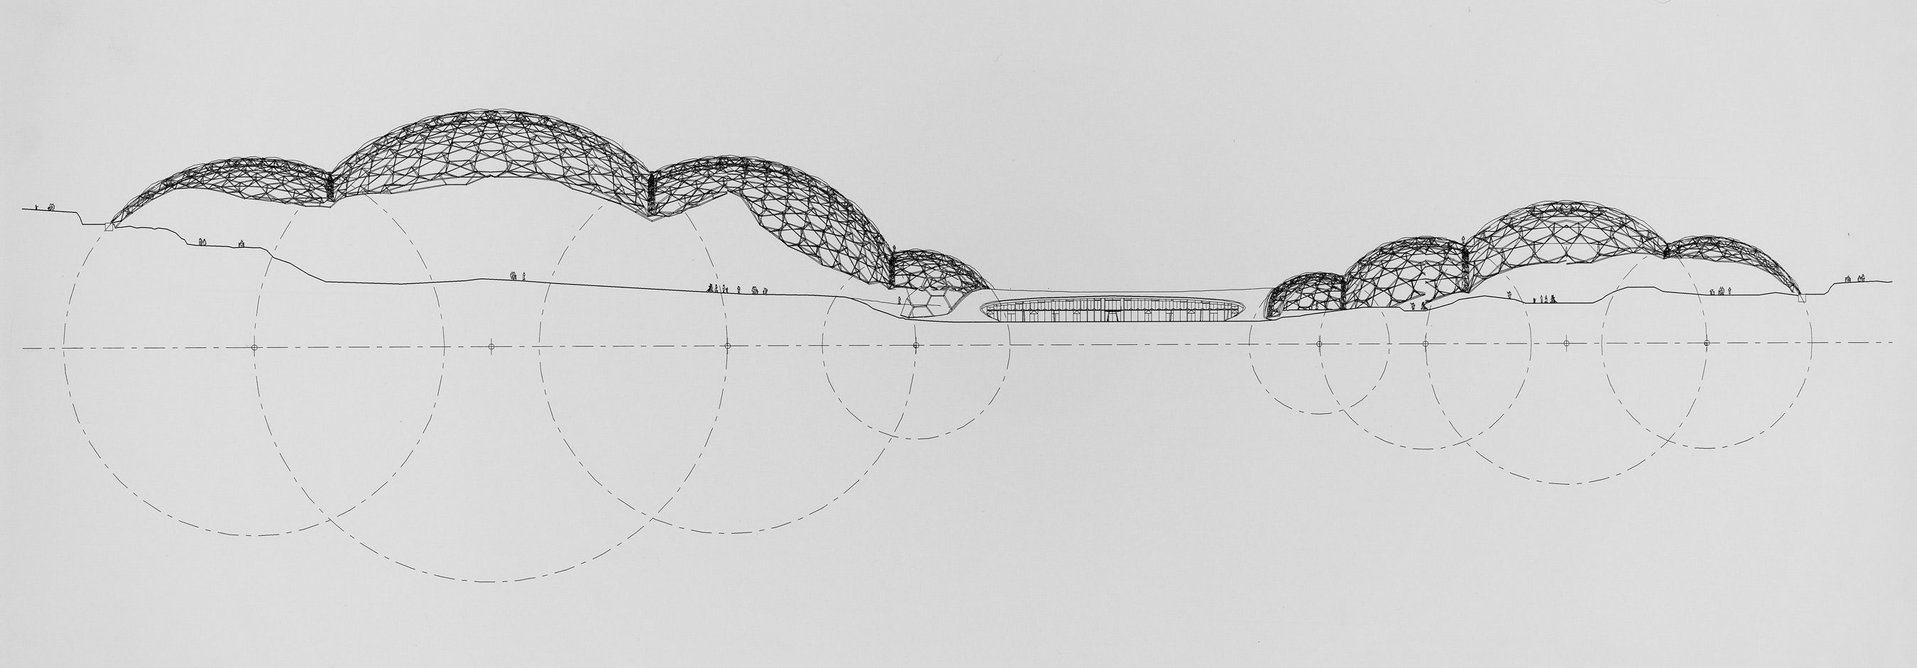 Nicholas Grimshaw & Partners’ design for the Eden Project, Bodelva, Cornwall.